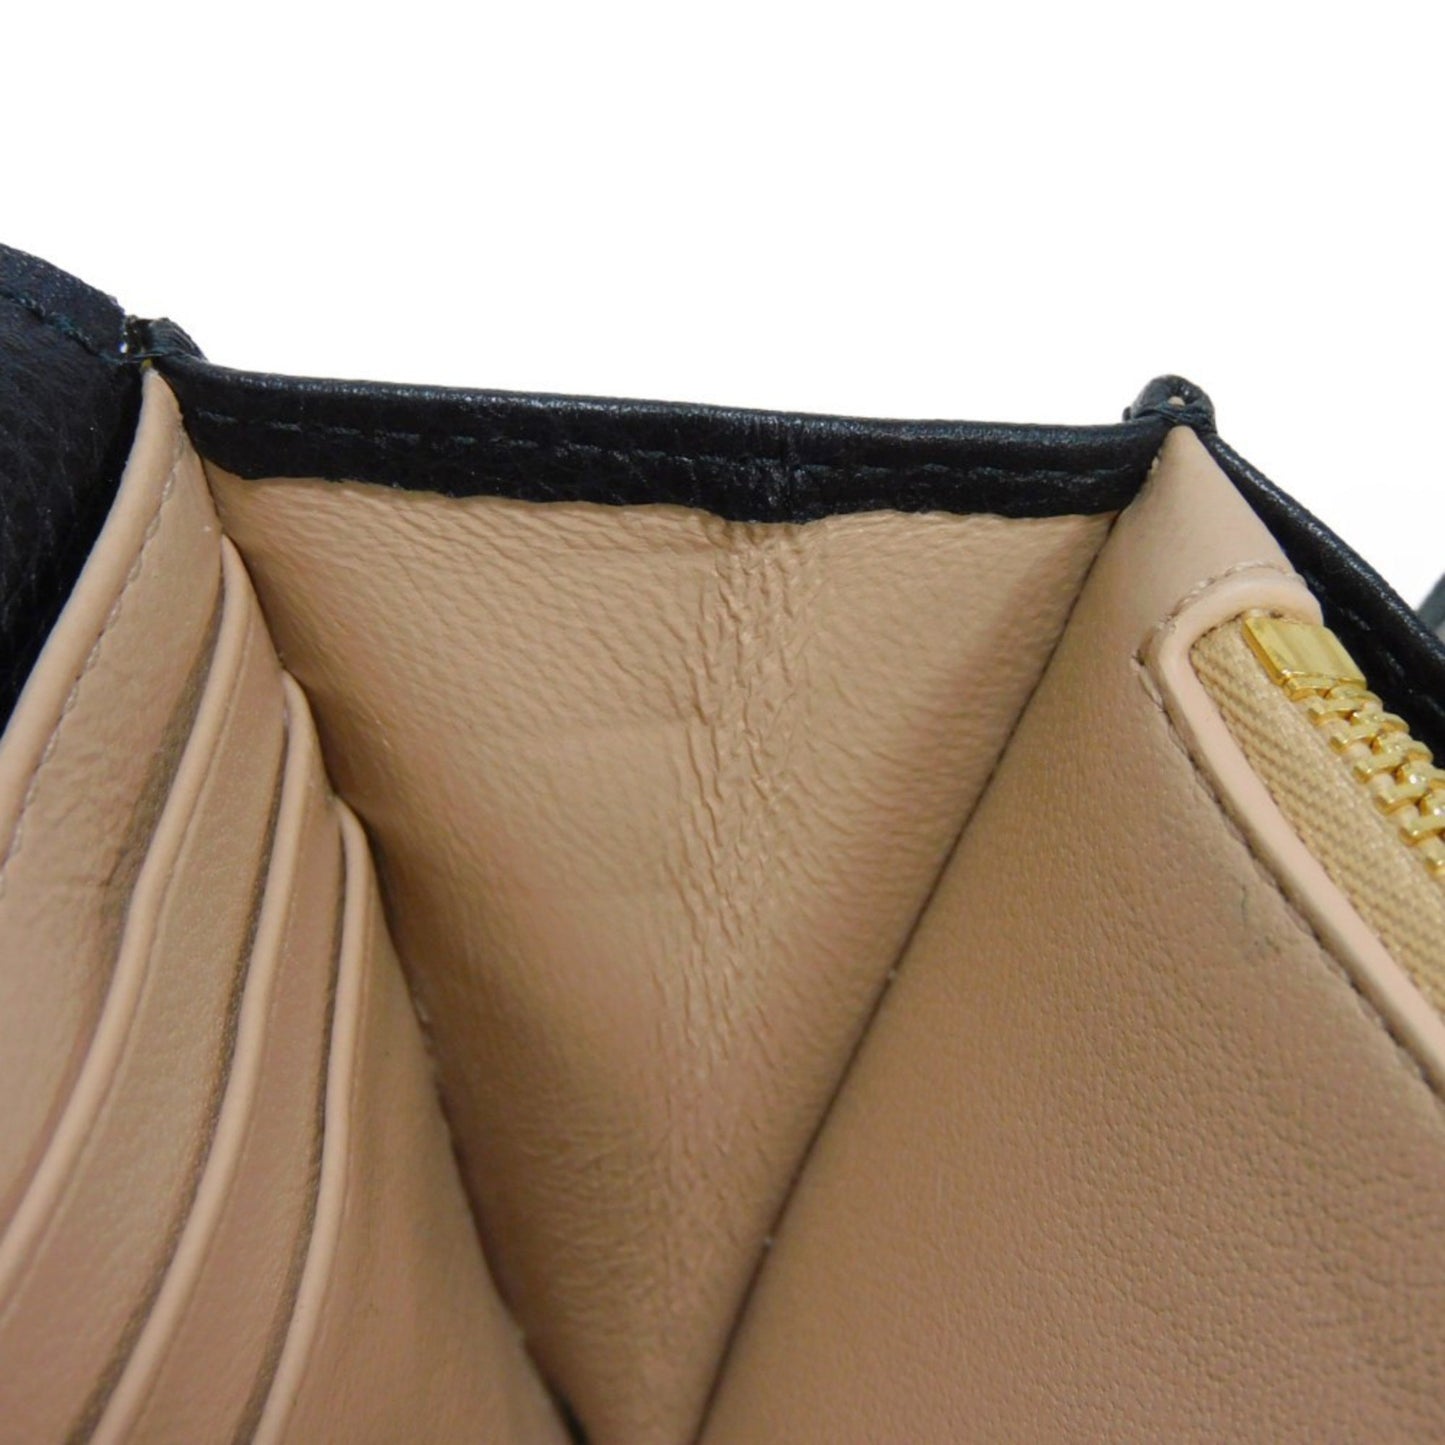 Chloe Women's Black Leather Bi-Fold Wallet - Excellent Condition in Black